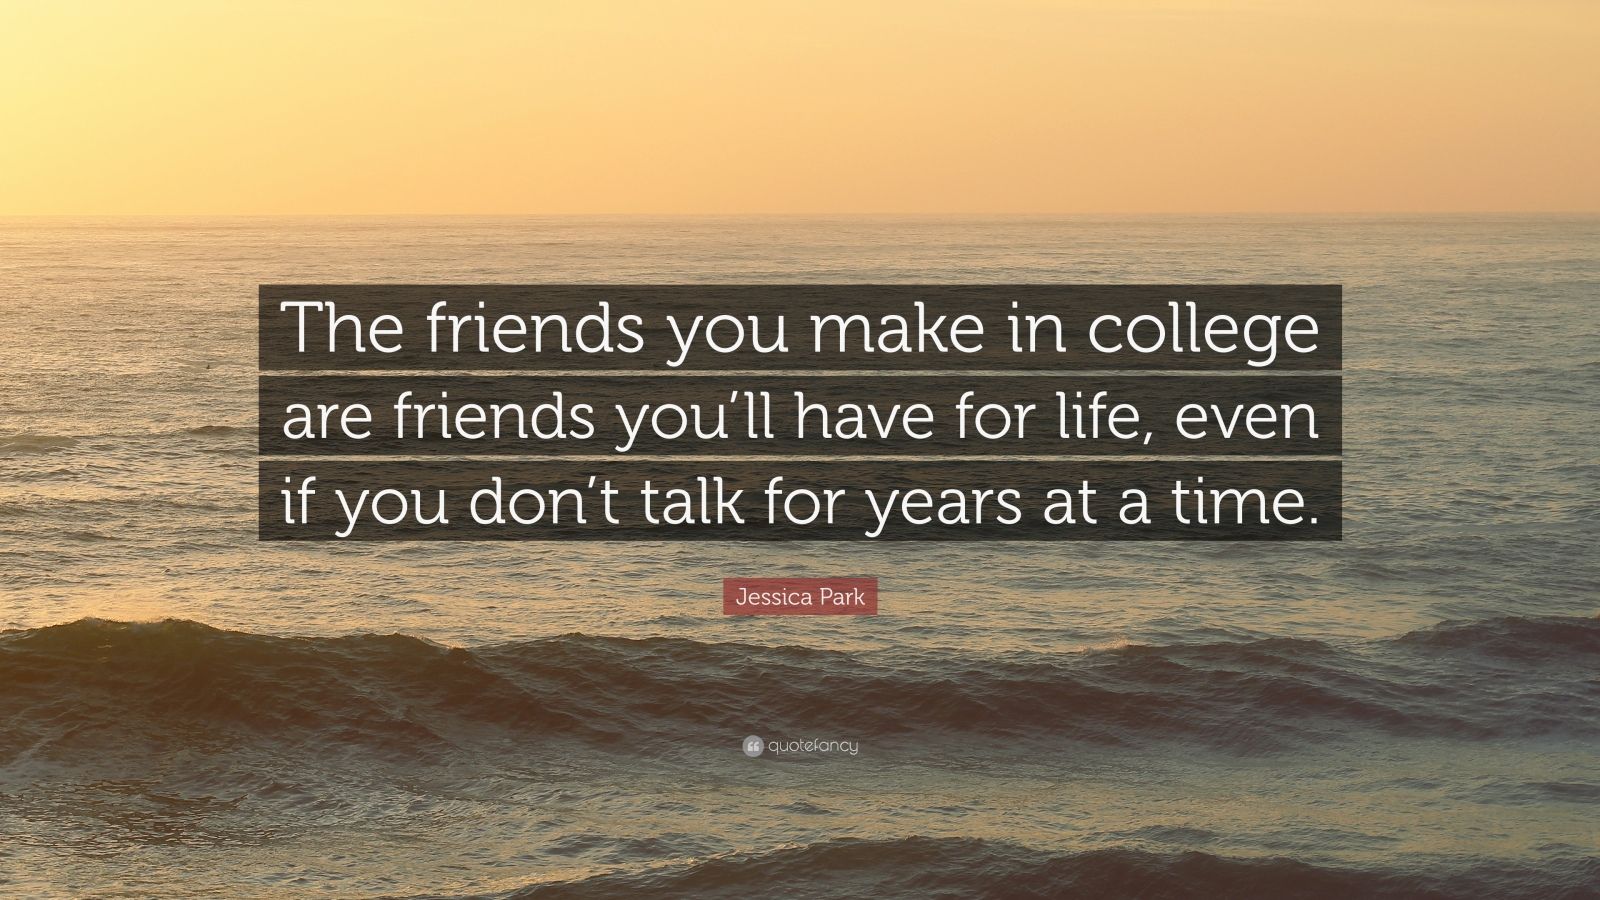 College quotes friendship quotesbae